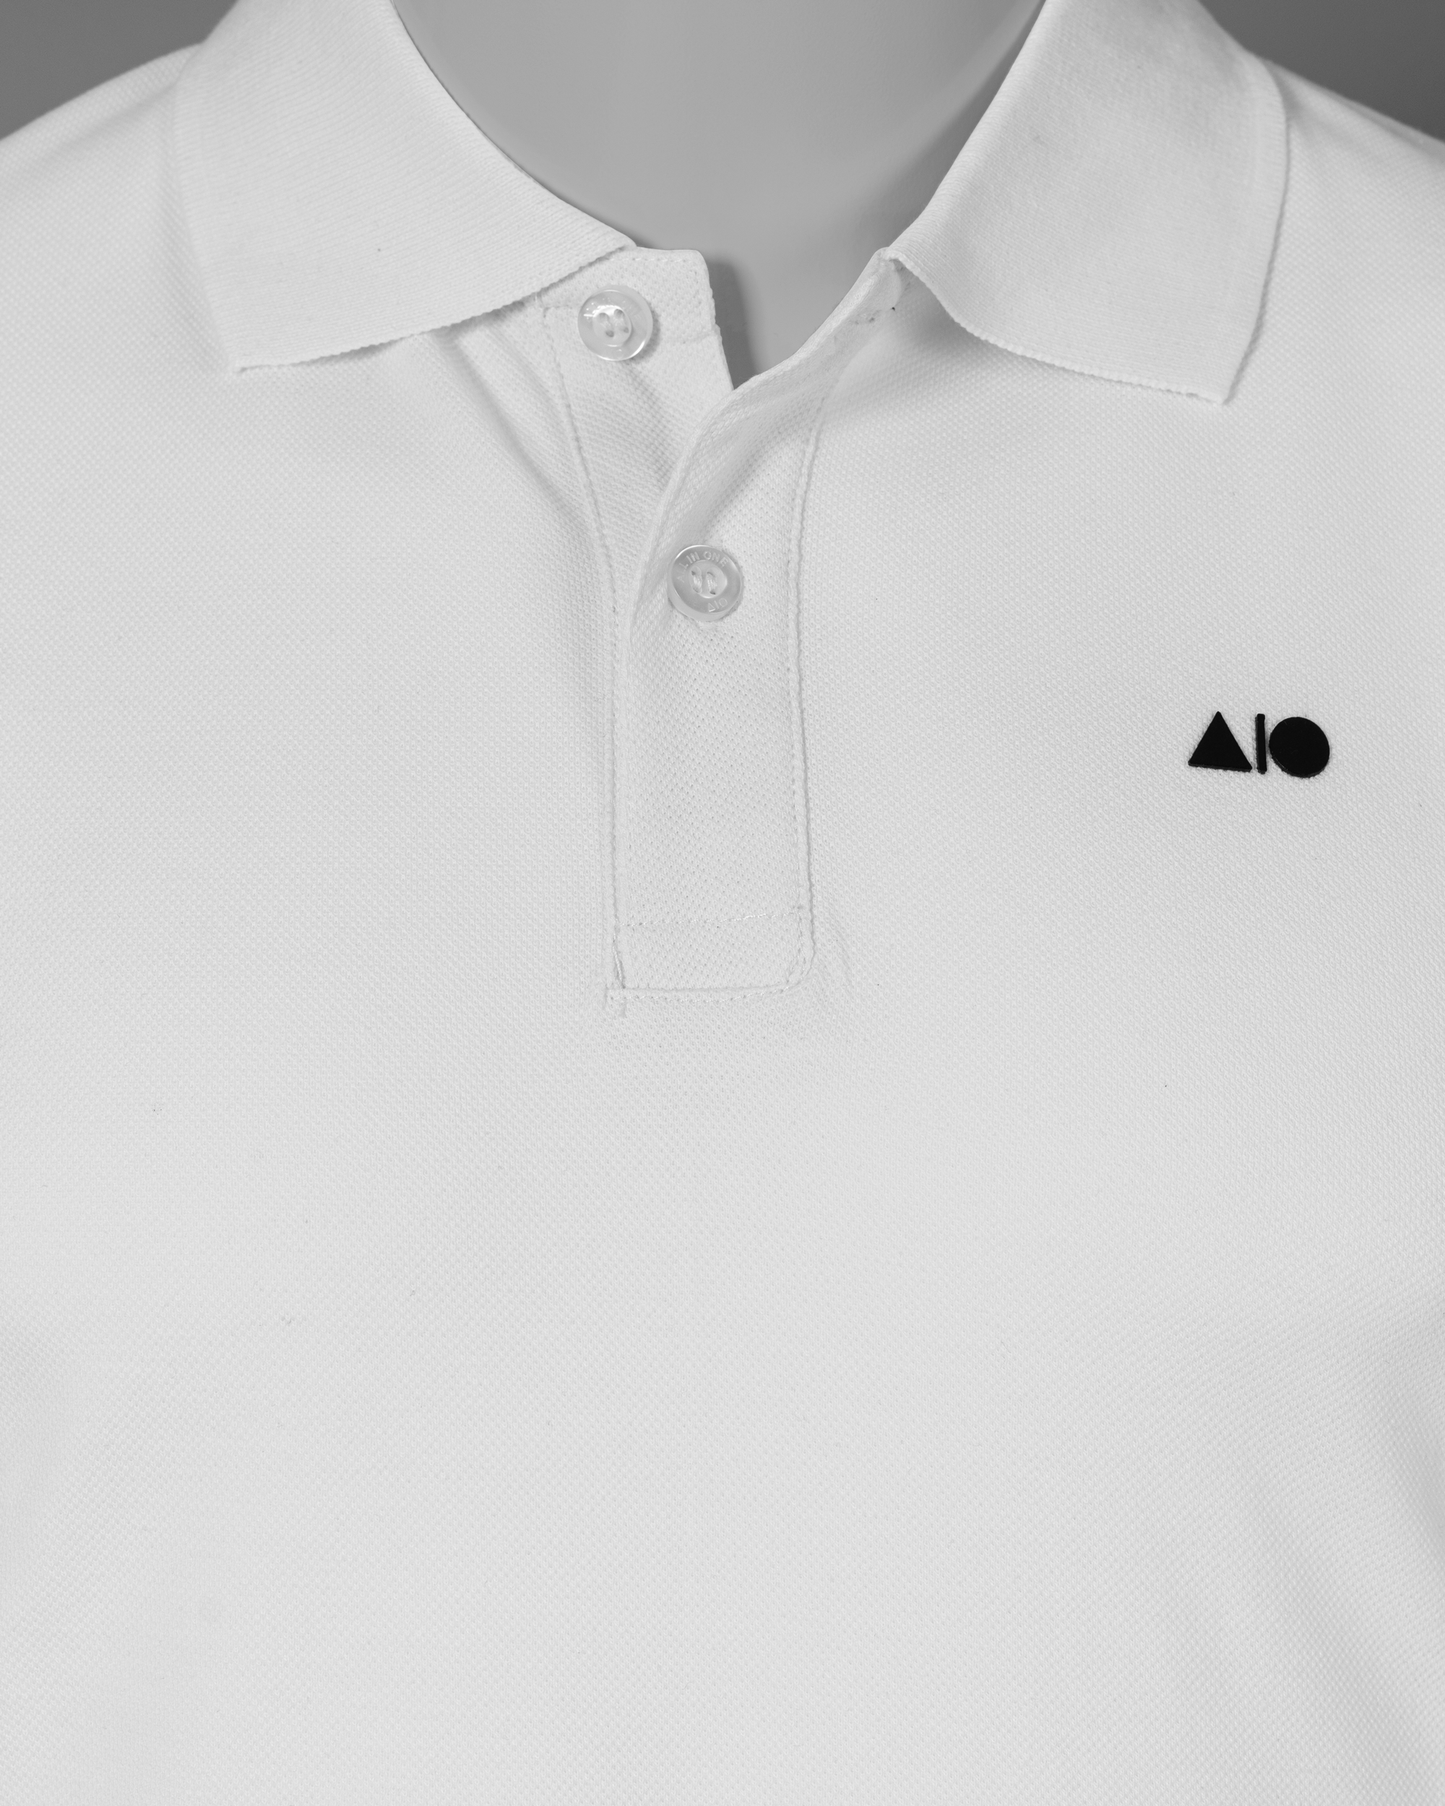 Mens Basic Polo Shirt (White)